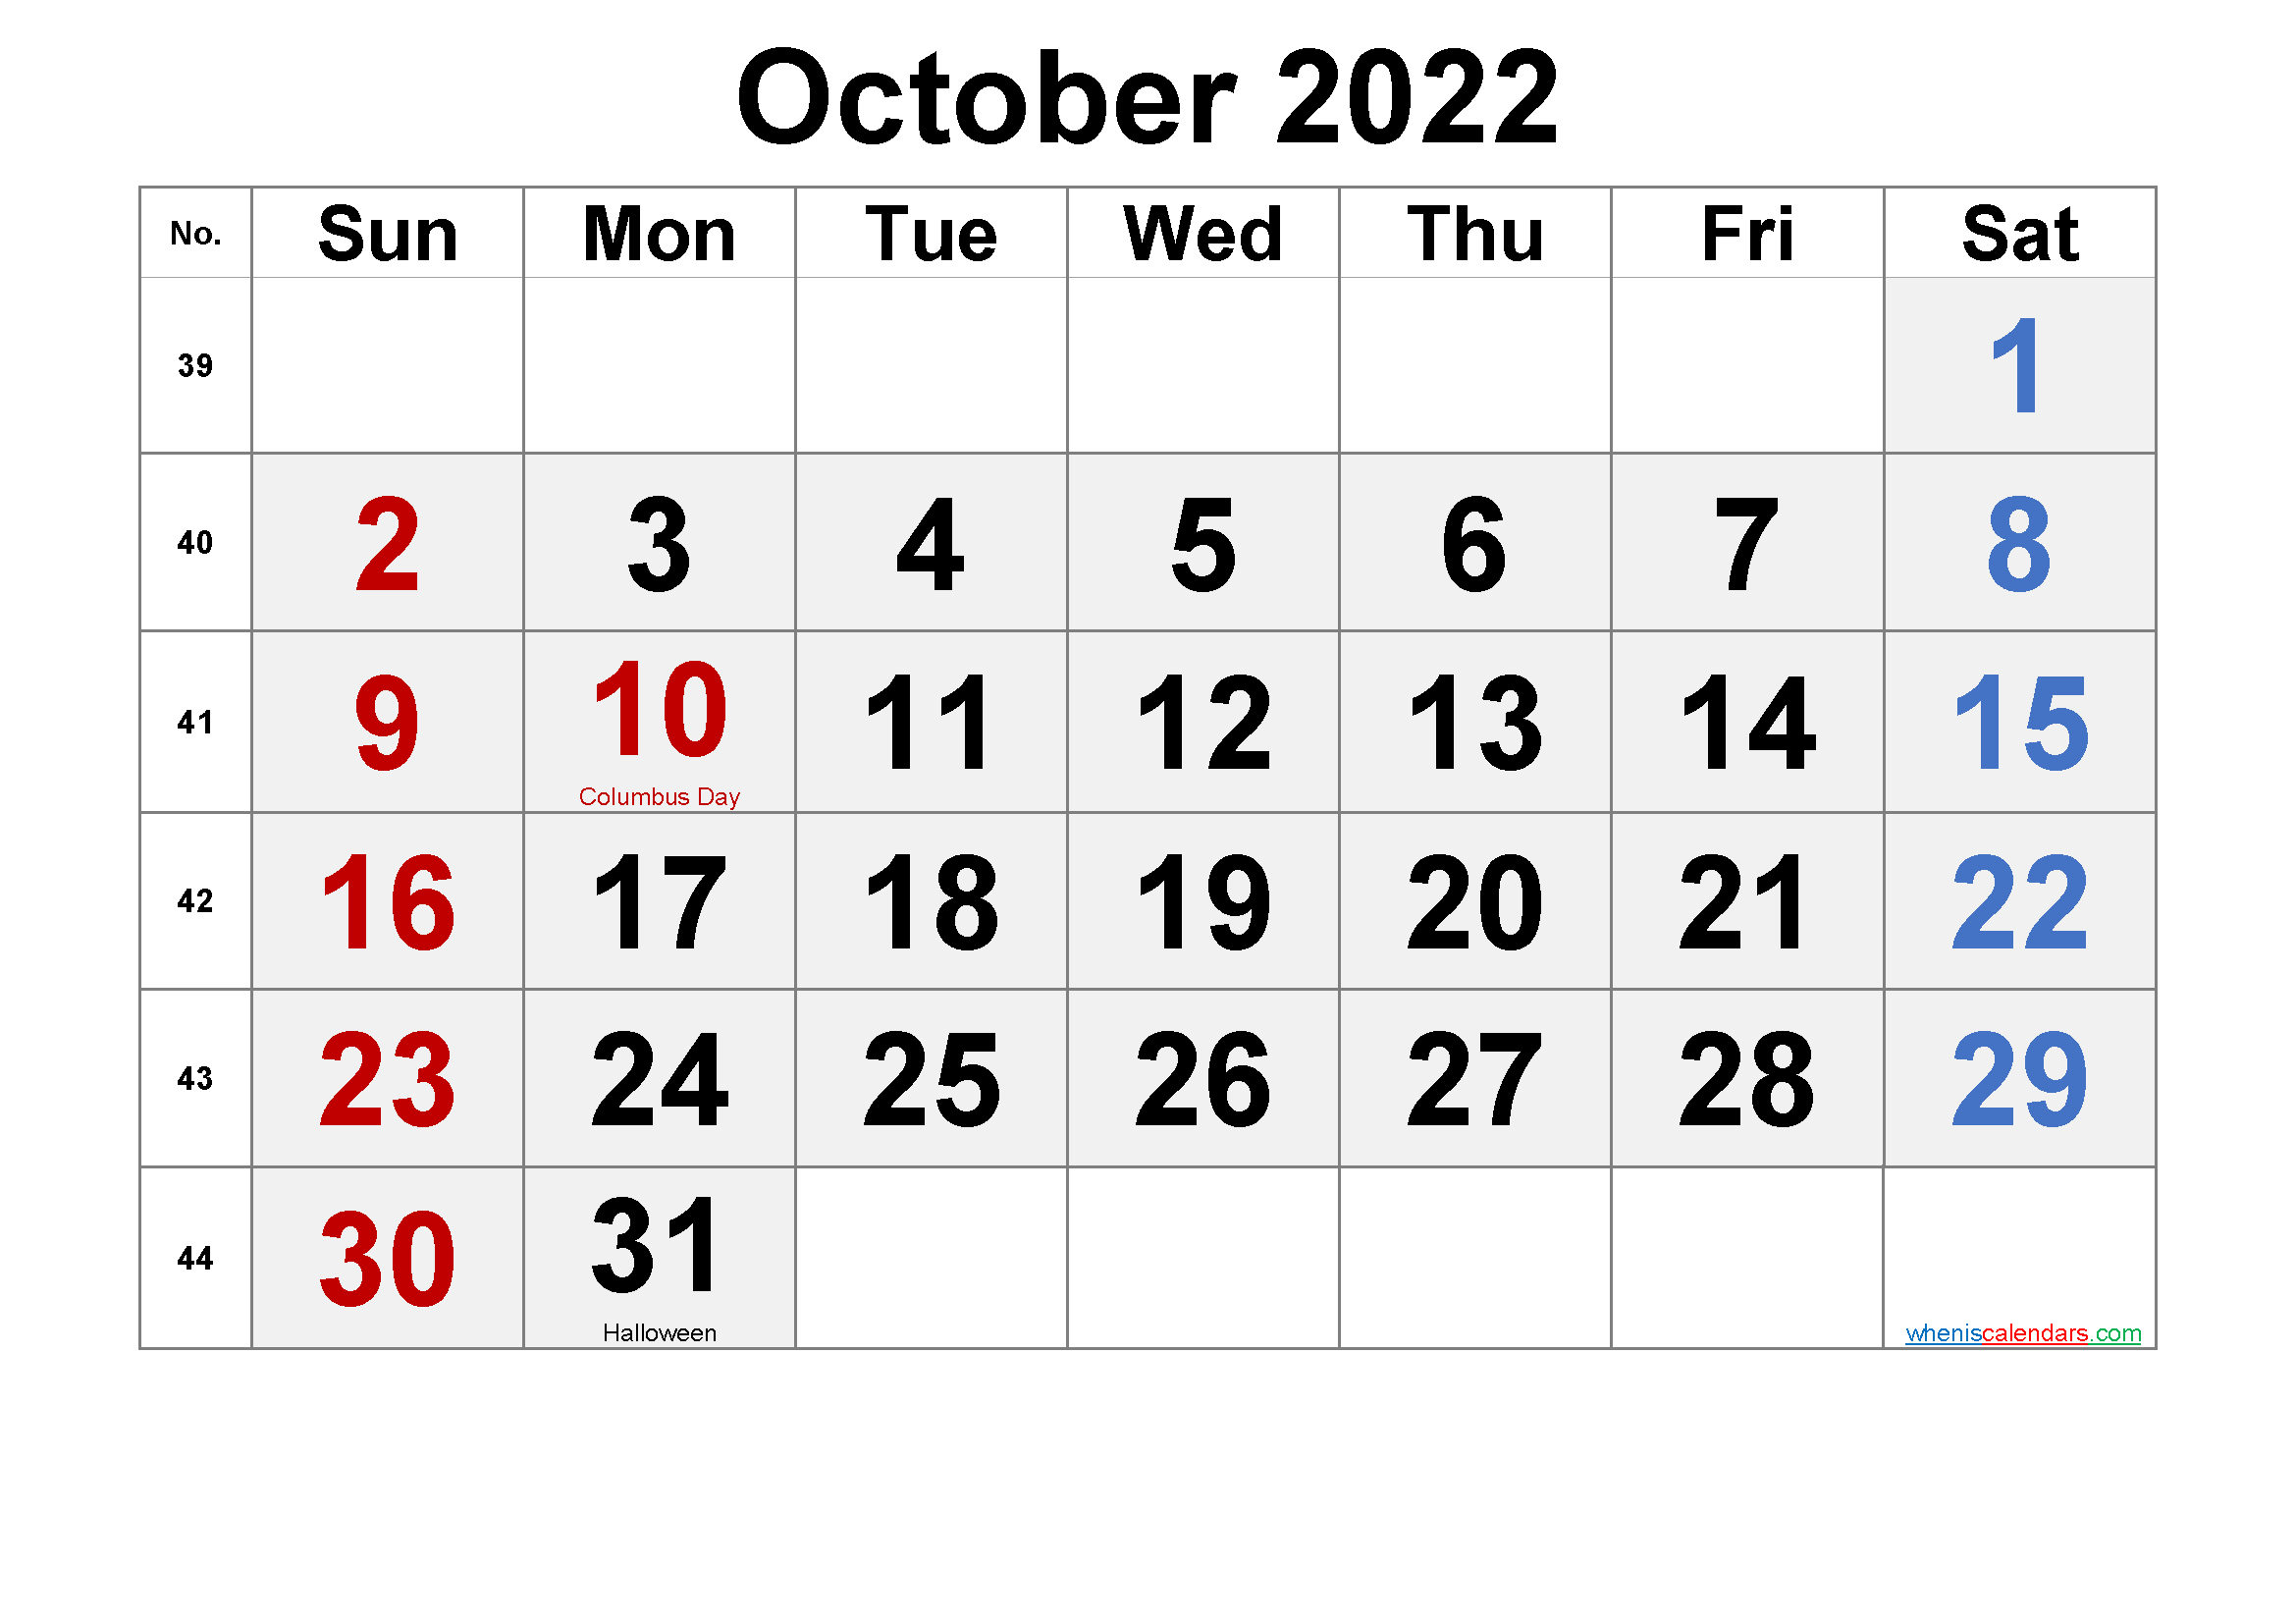 free-printable-october-2022-calendar